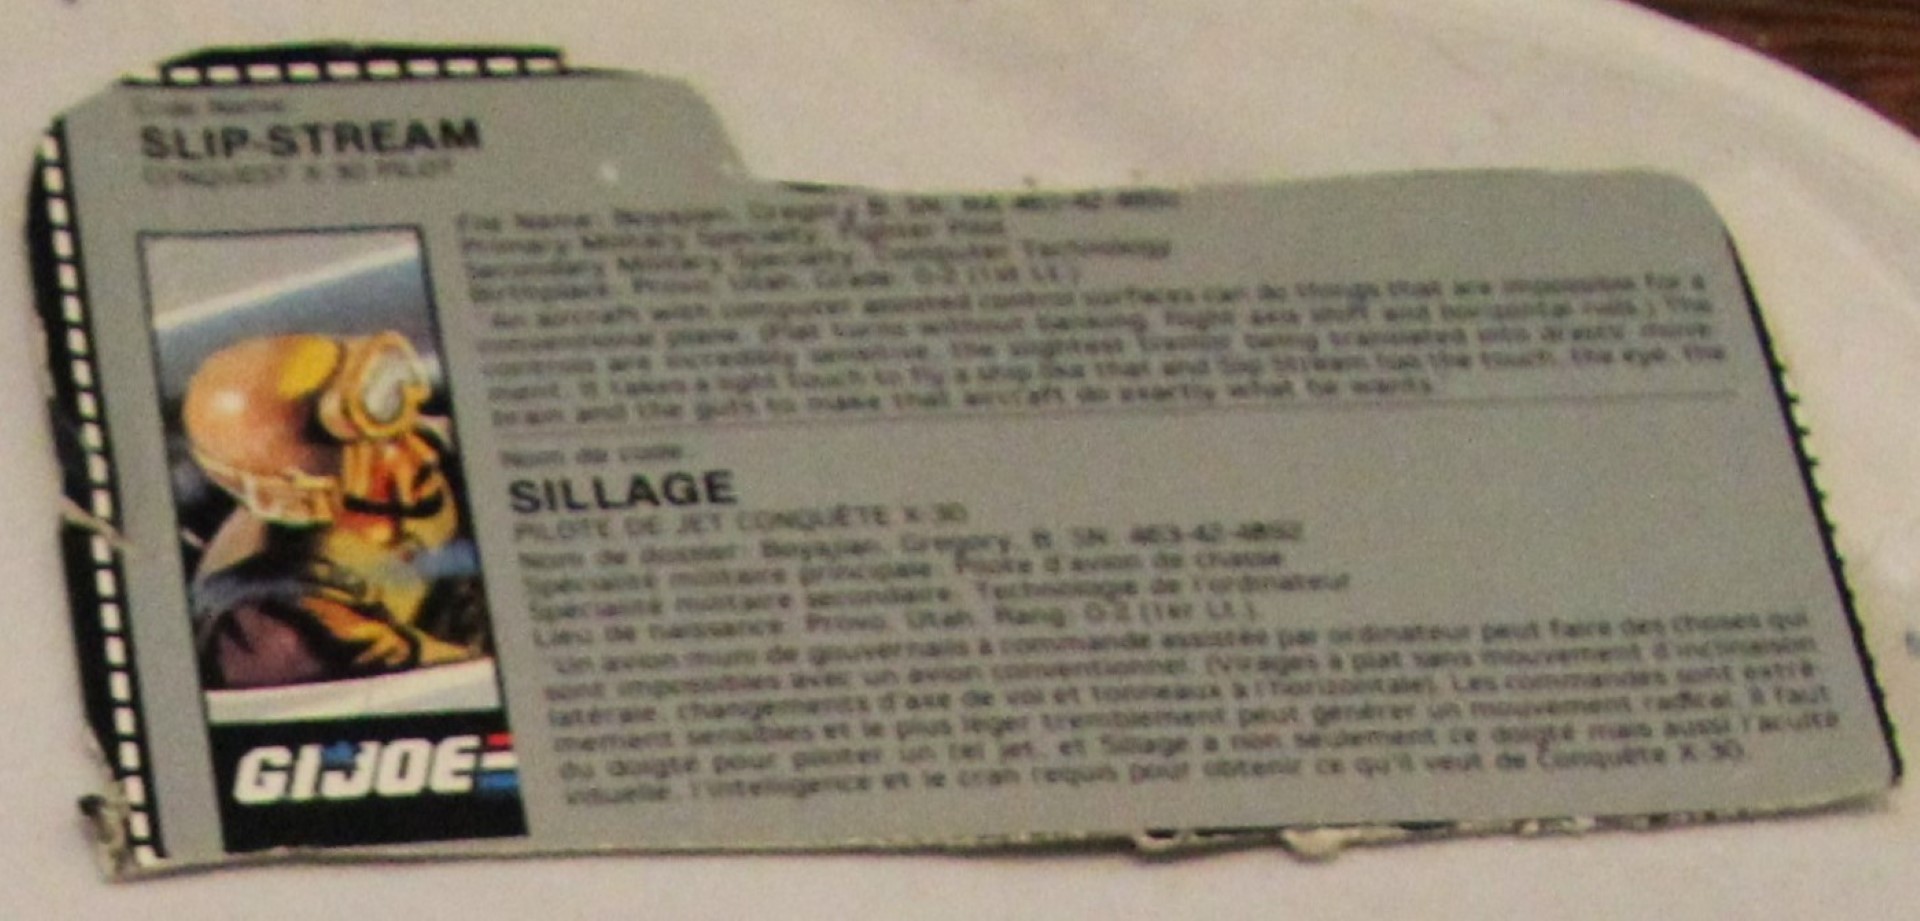 1986 slipstream file card